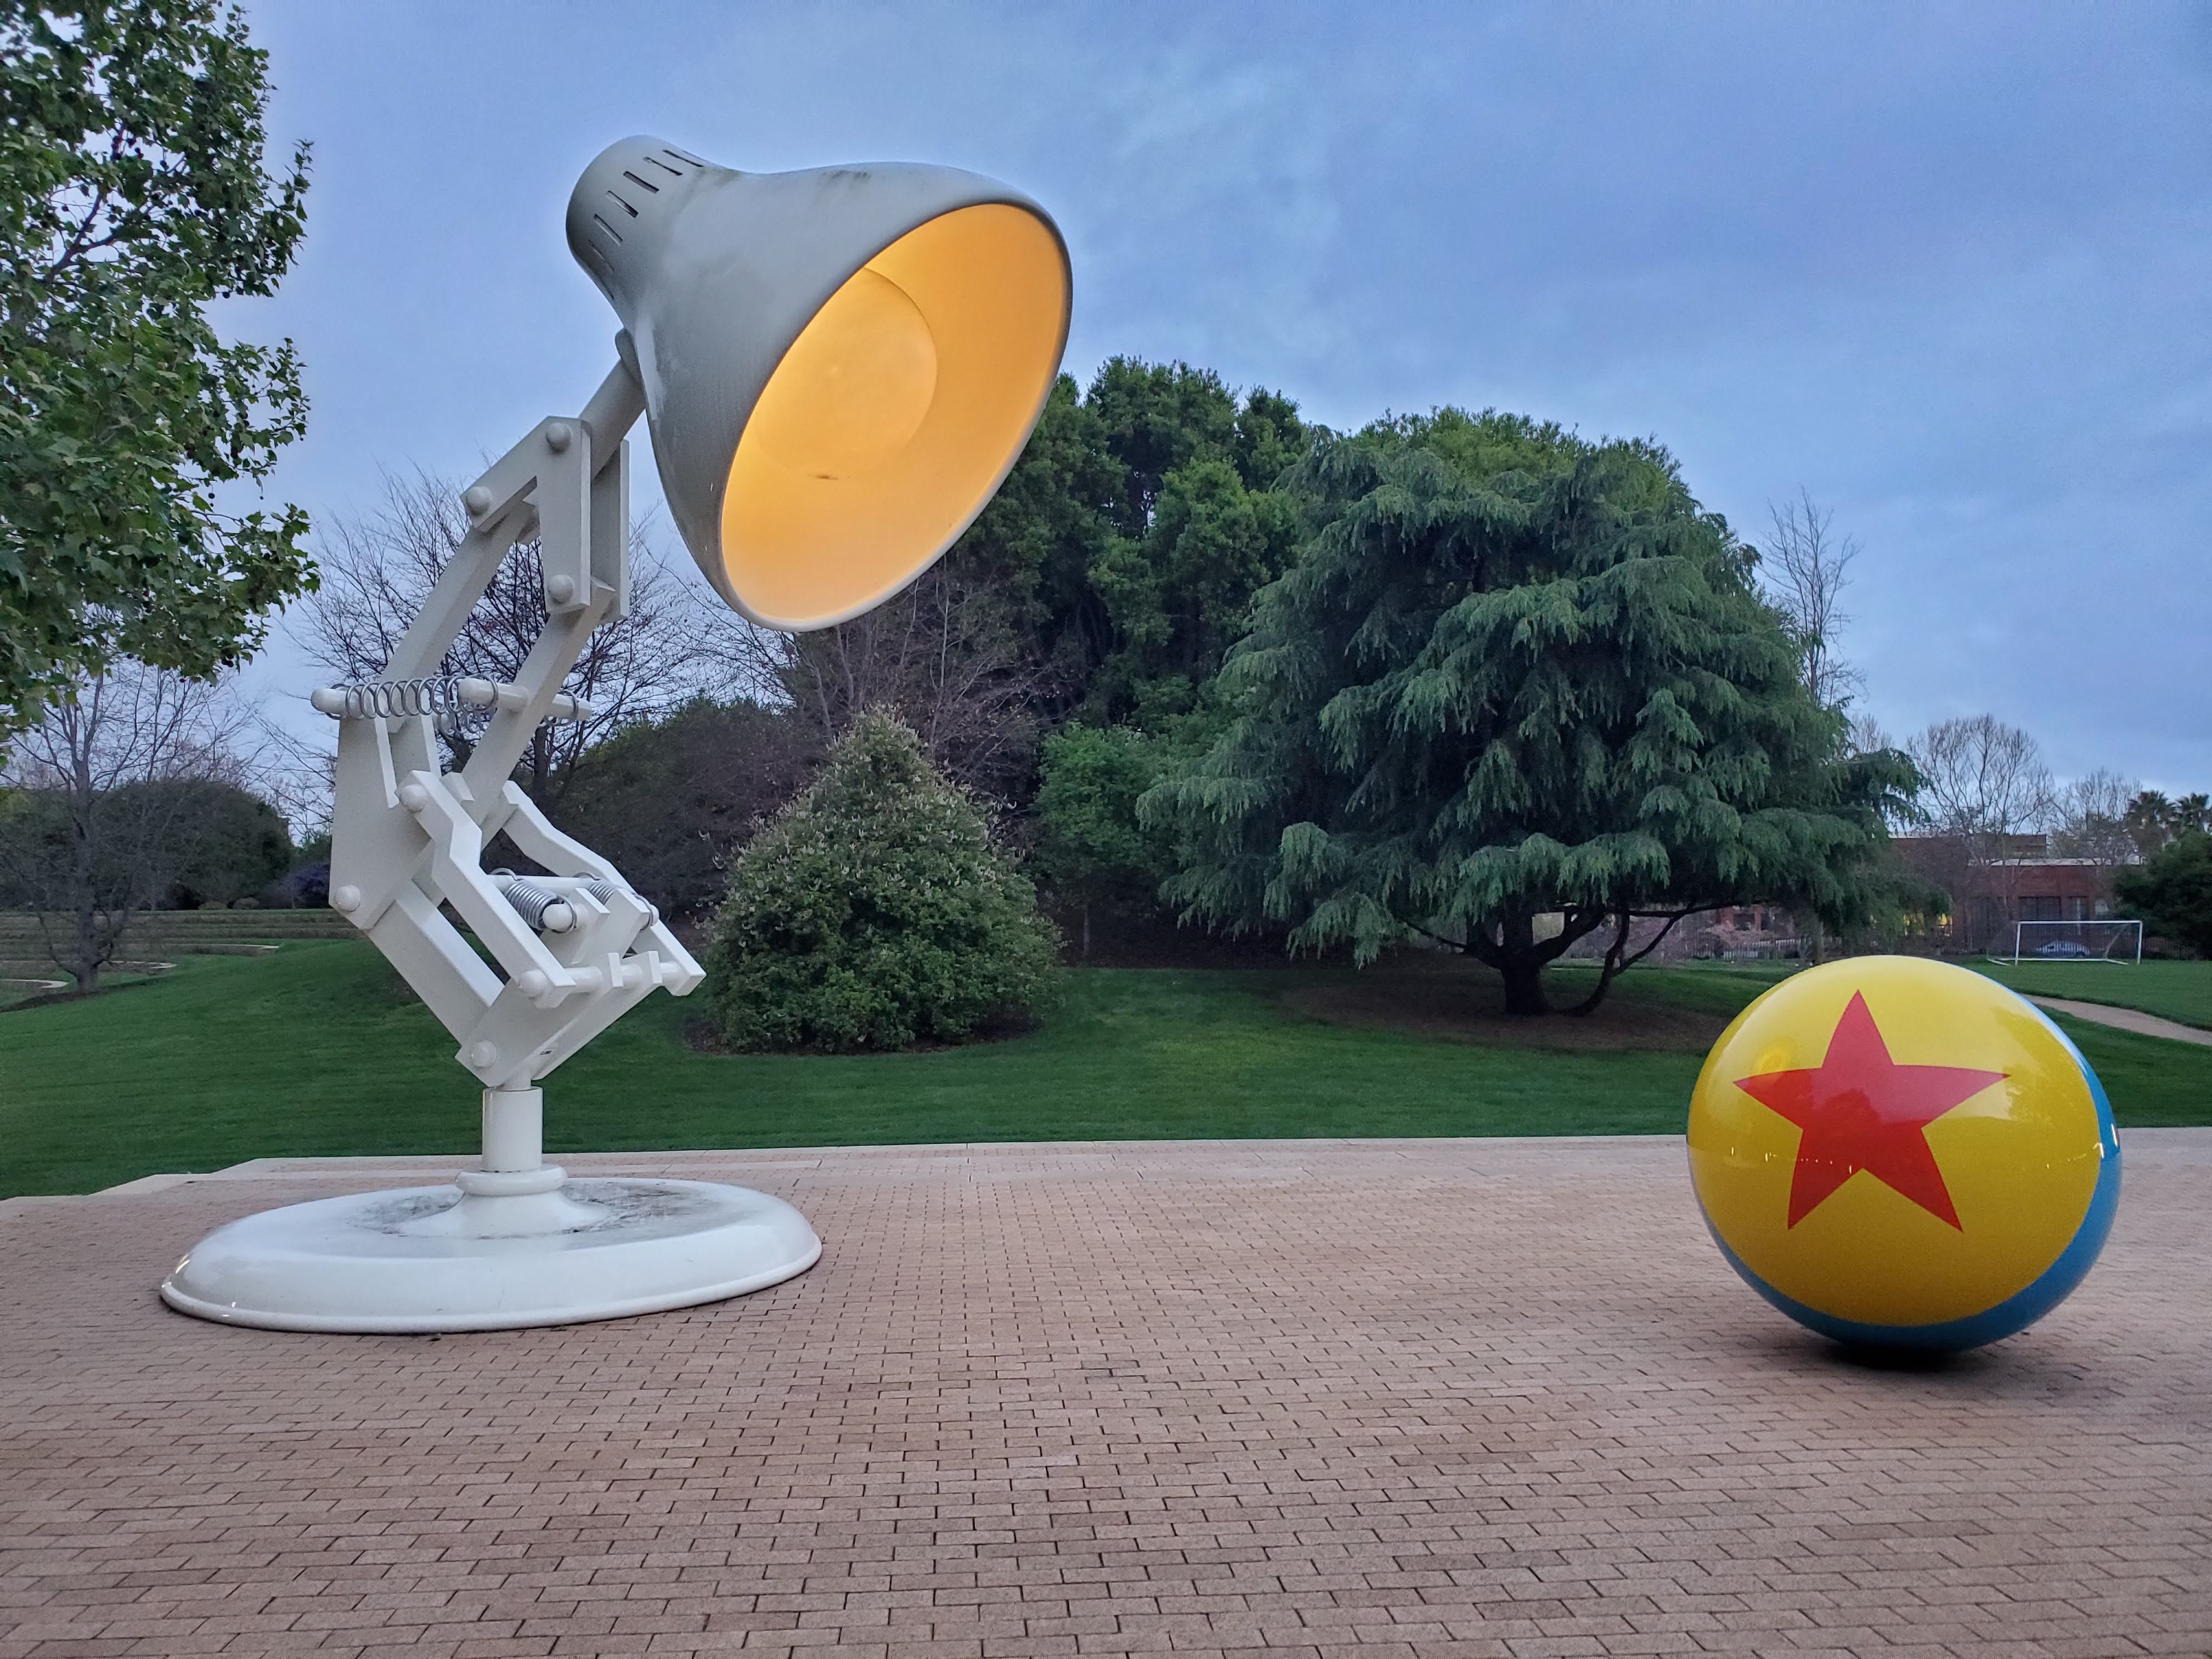 Toy Story 4 Press Day at Pixar Studios Day 1